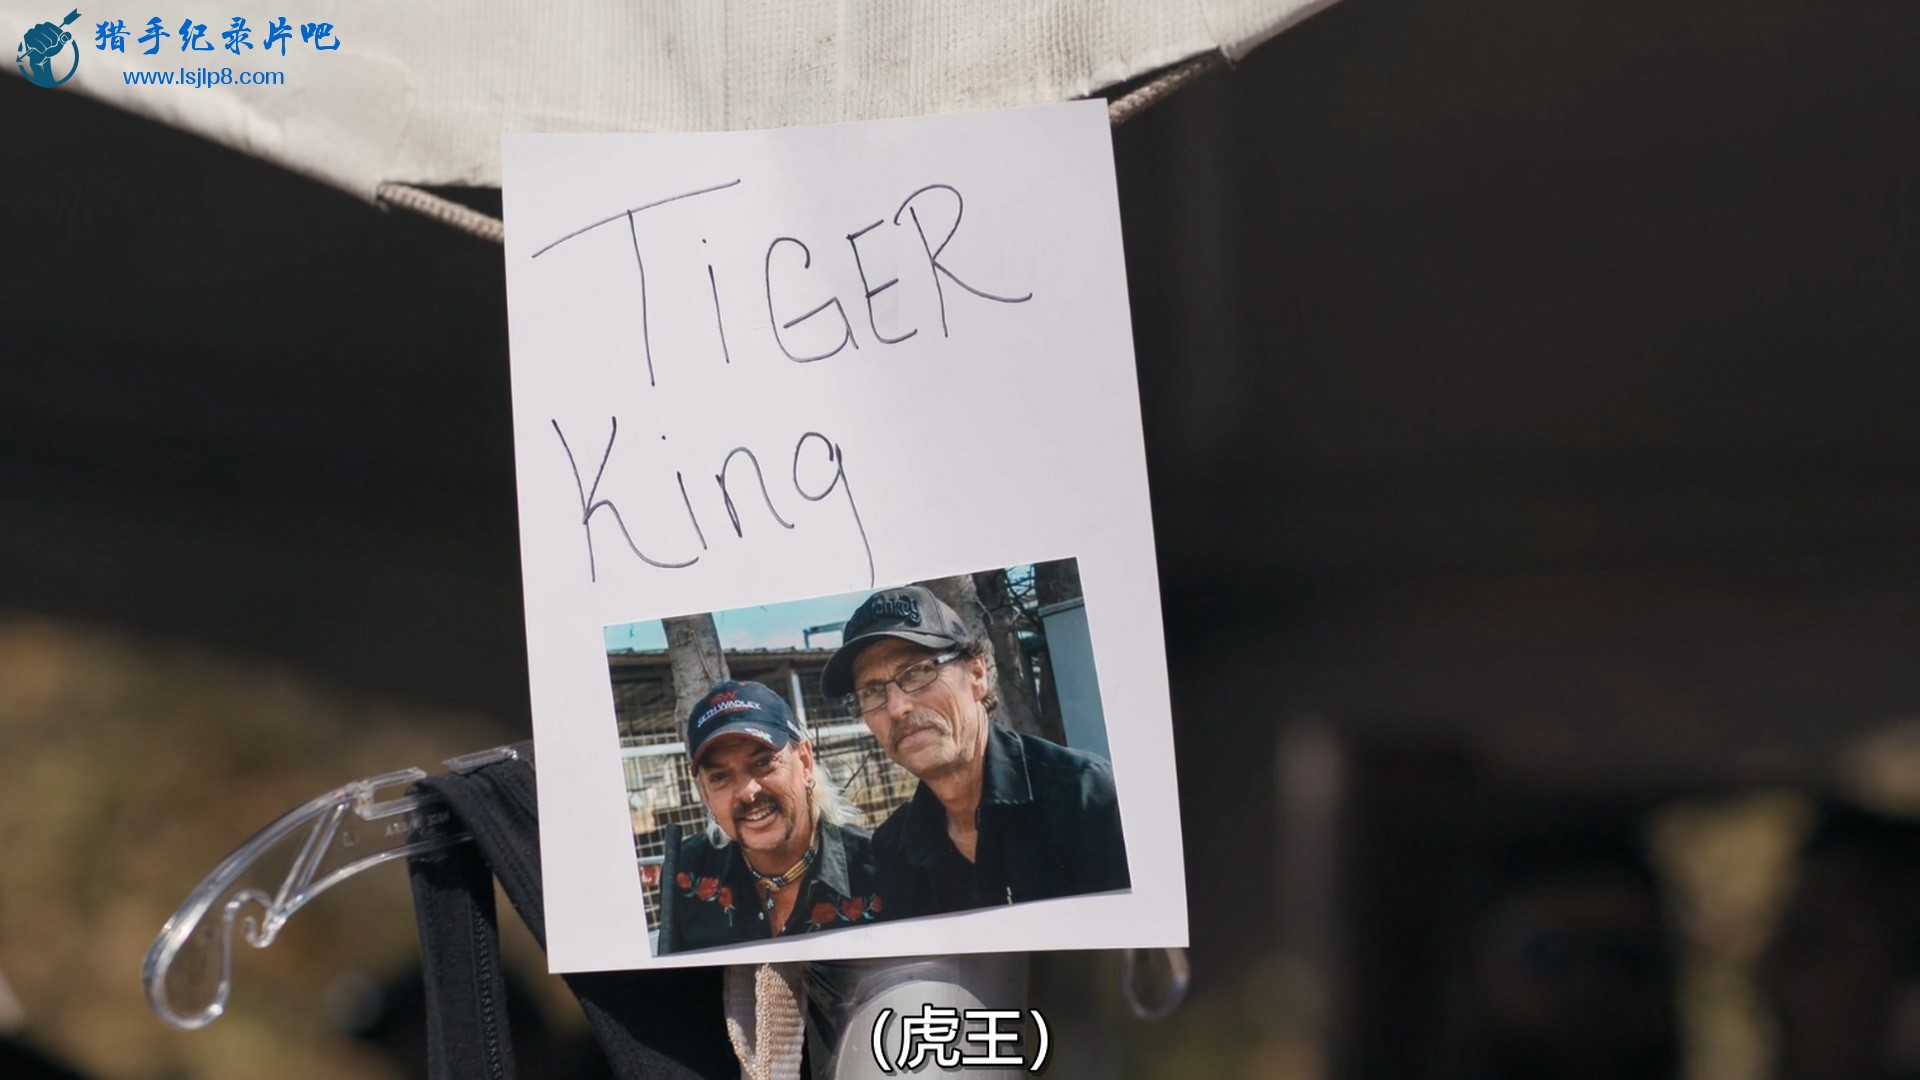 Tiger.King.S02E01.Beg.Your.Pardon.1080p.NF.WEB-DL.DDP5.1.x264-TEPES.mkv_20211119.jpg